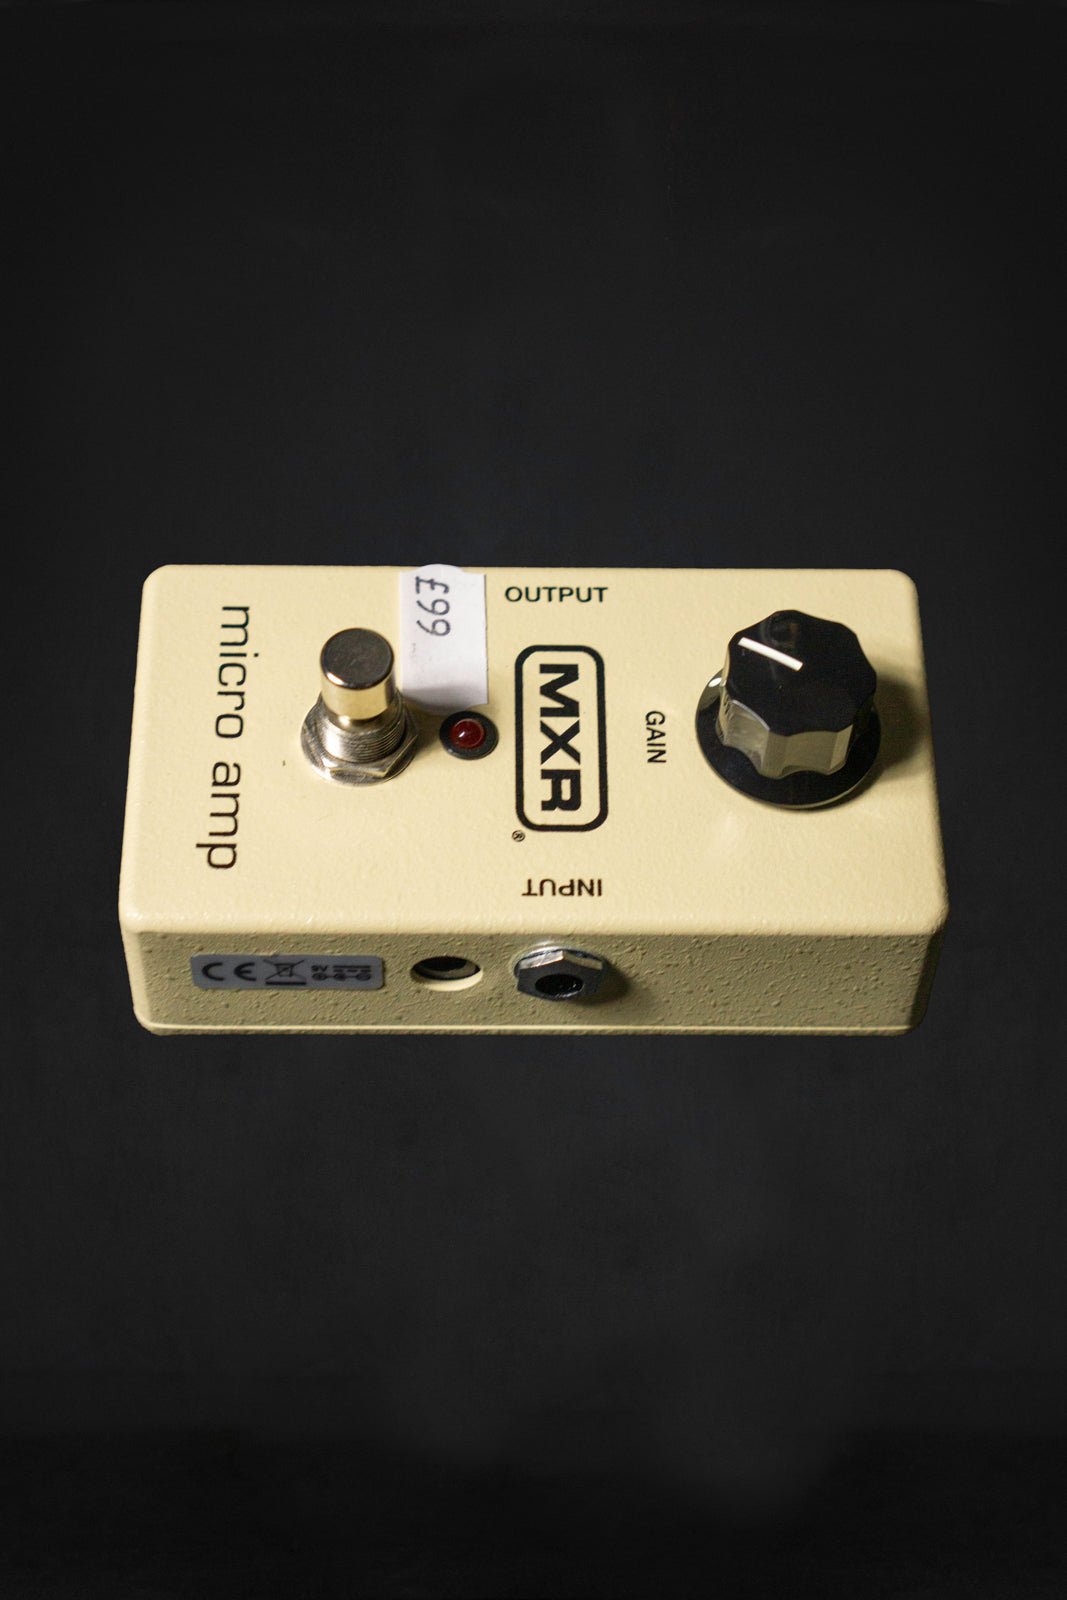 MXR Micro Amp Pedal - Effects Pedals - MXR